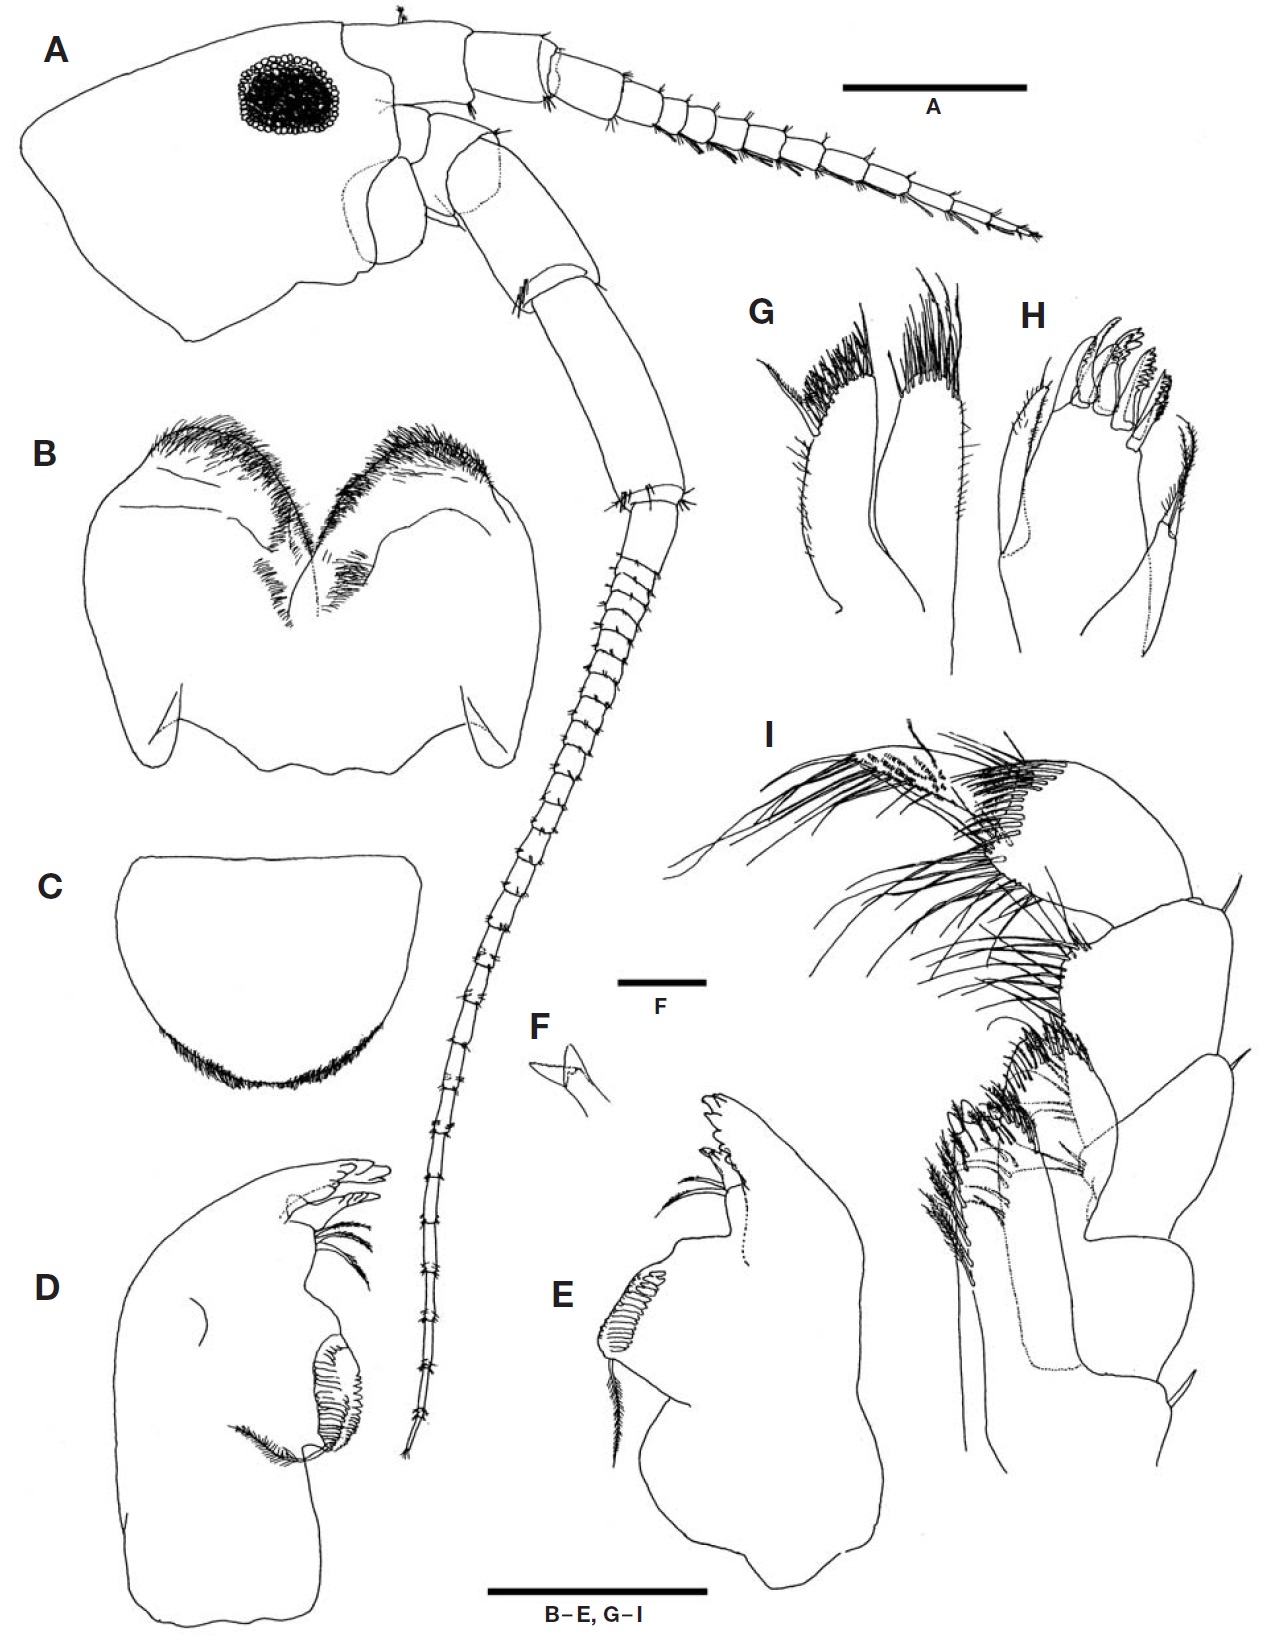 Protohyale (Boreohyale) triangulata (Hiwatari, 2003), male. A, Head, antenna 1 and antenna 2; B, Lower lip; C, Upper lip; D, Left mandible; E, Right mandible; F, Lacina mobilis of right mandible; G, Maxilla 2; H, Maxilla 1; I, Maxilliped. Scale bars: A, F=0.5 mm, B-E, G-I=0.25 mm.